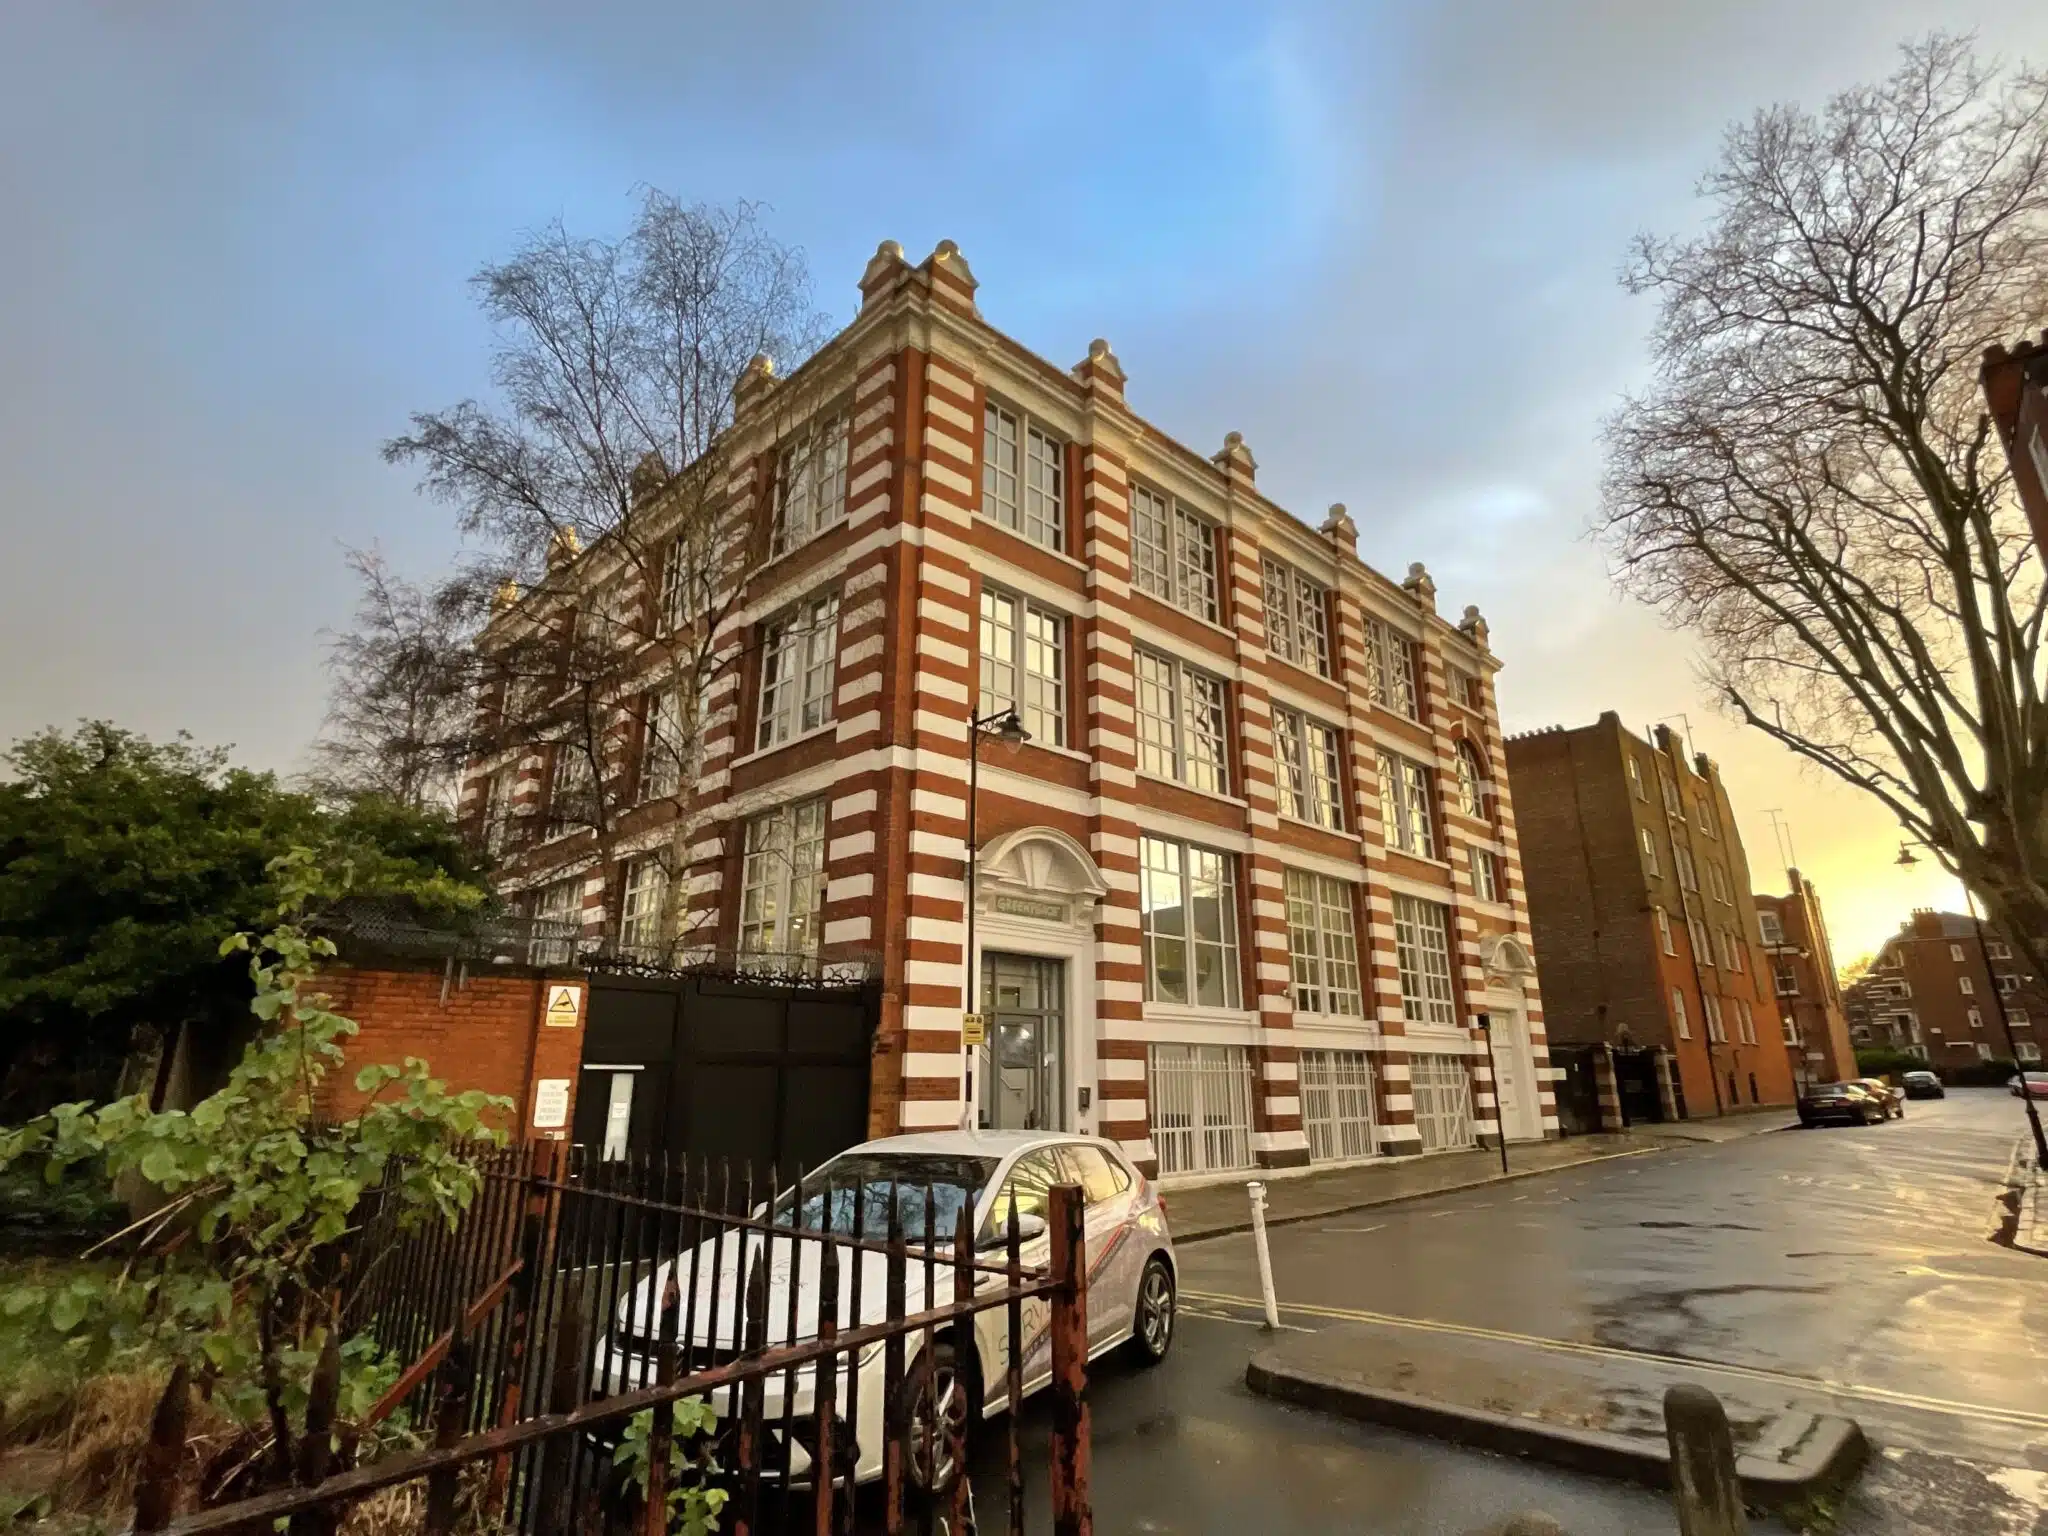 Canonbury Villas, Islington, London. Photo by https://xpsurveys.co.uk/case-study/greenpeace-uk-ltd-headquarters-london/